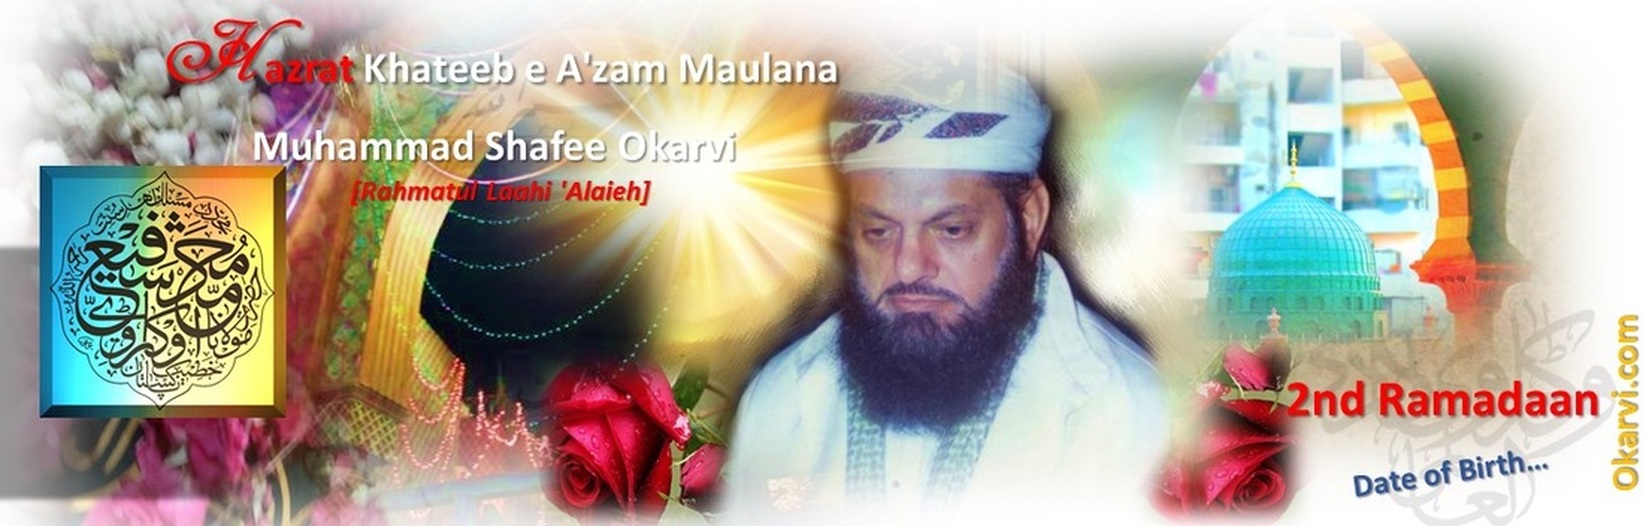 2nd Ramadaan : Birthday of Hazrat Khateeb e A'zam Maulana Muhammad Shafee Okarvi